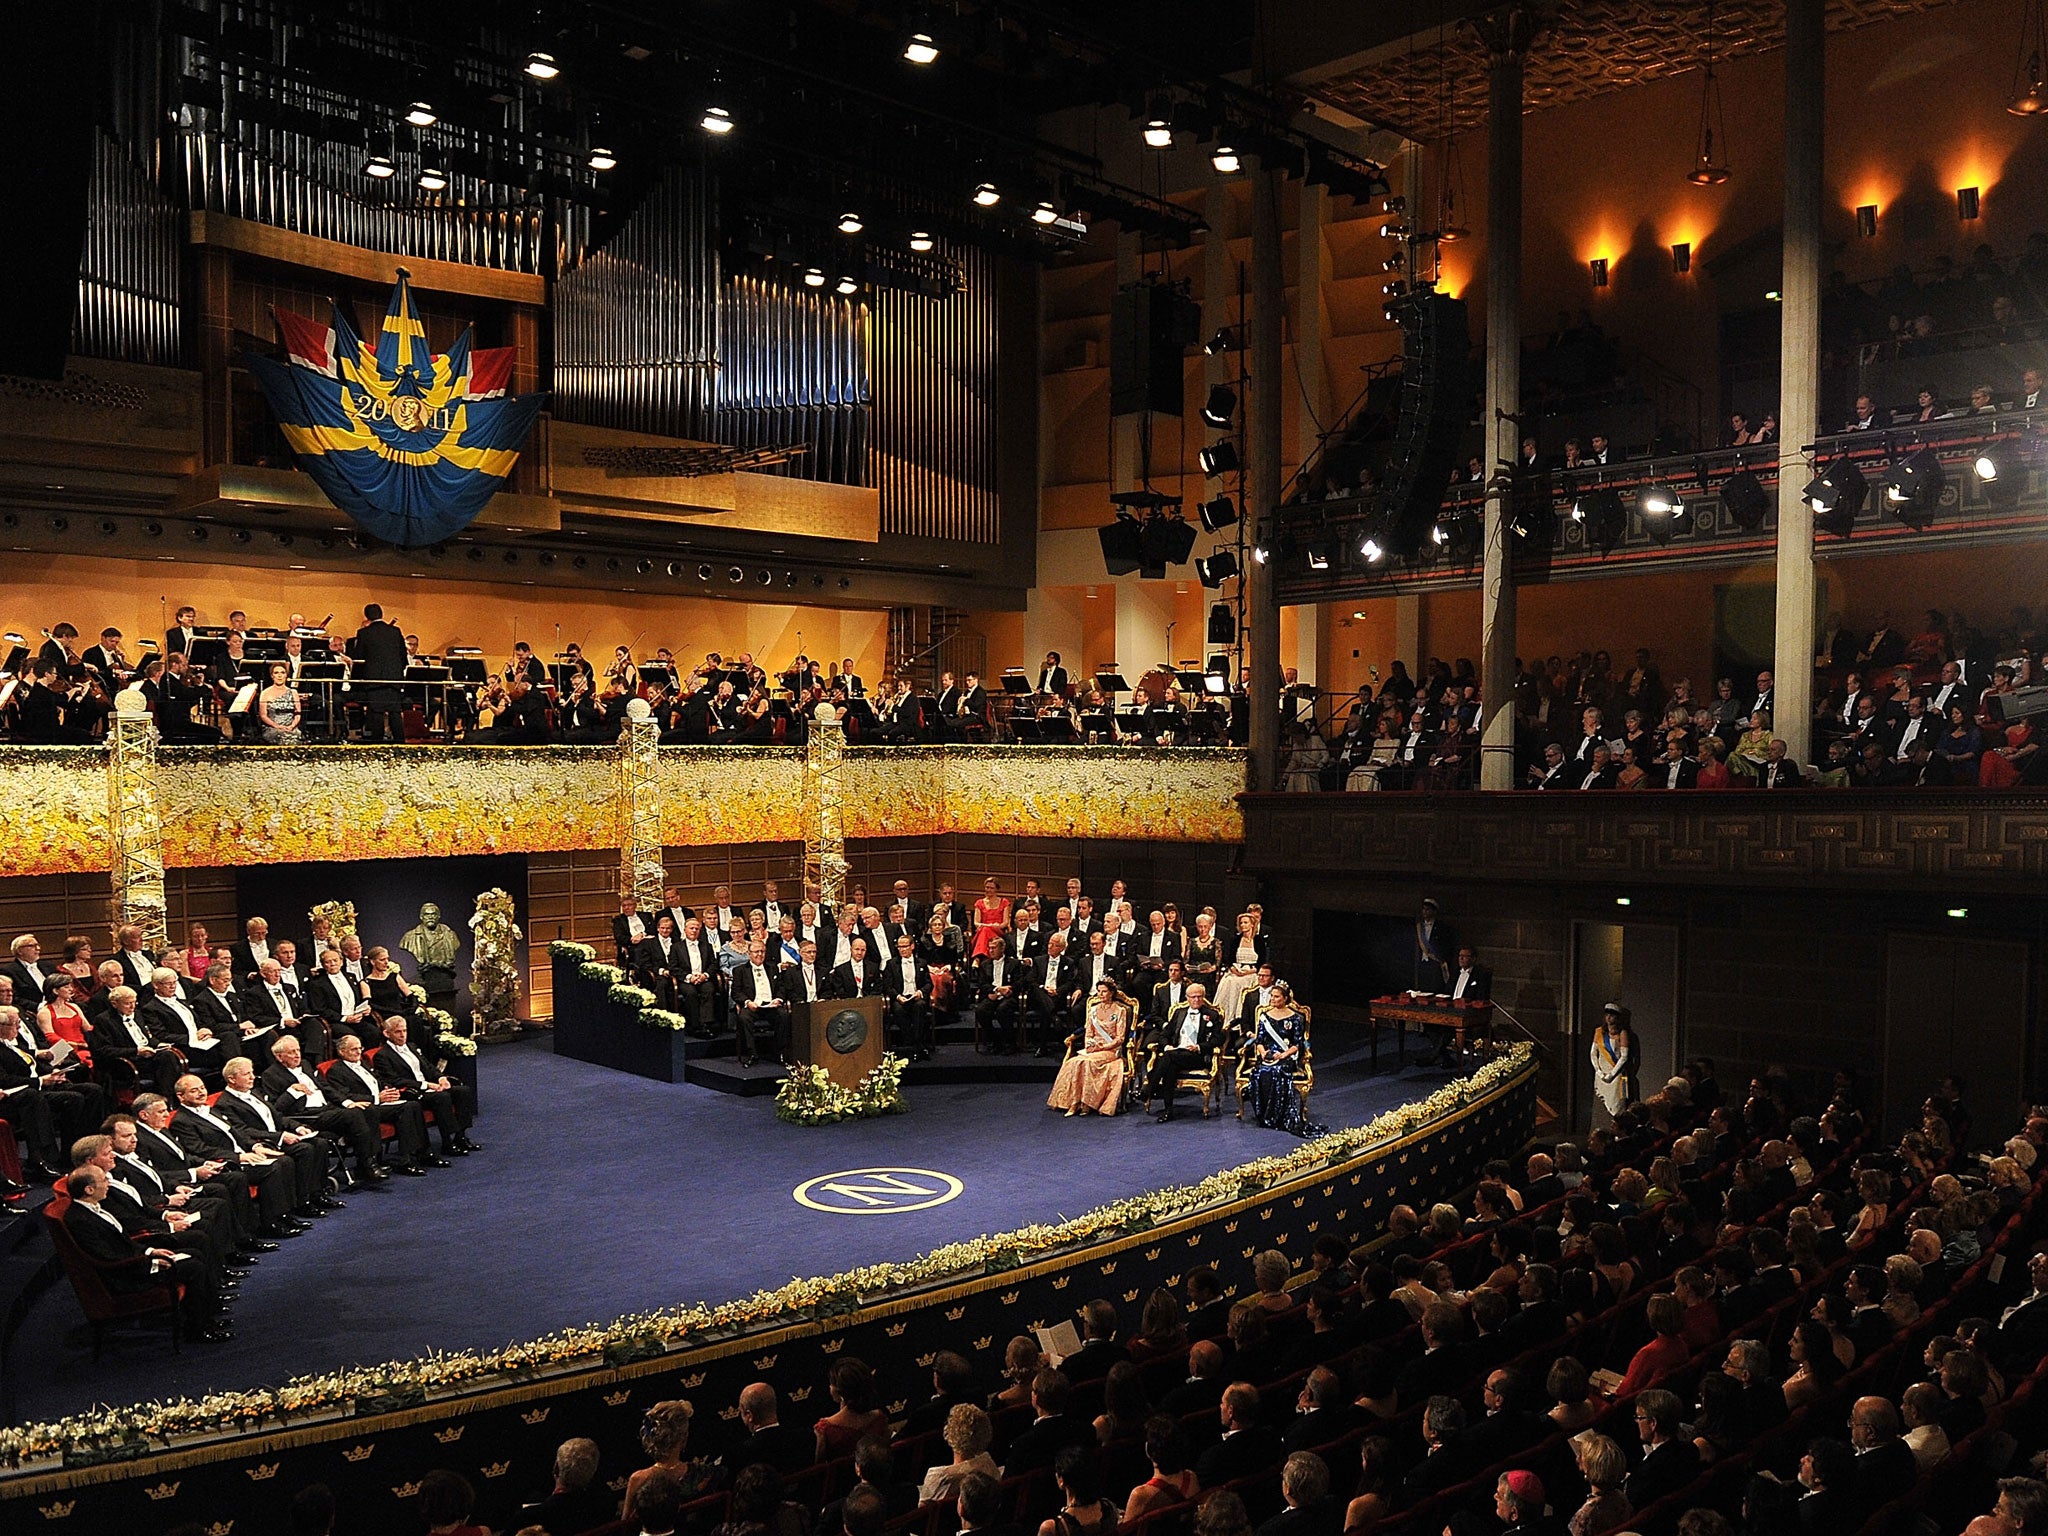 A general view of the Nobel Prize Award Ceremony at Stockholm Concert Hall on December 10, 2011